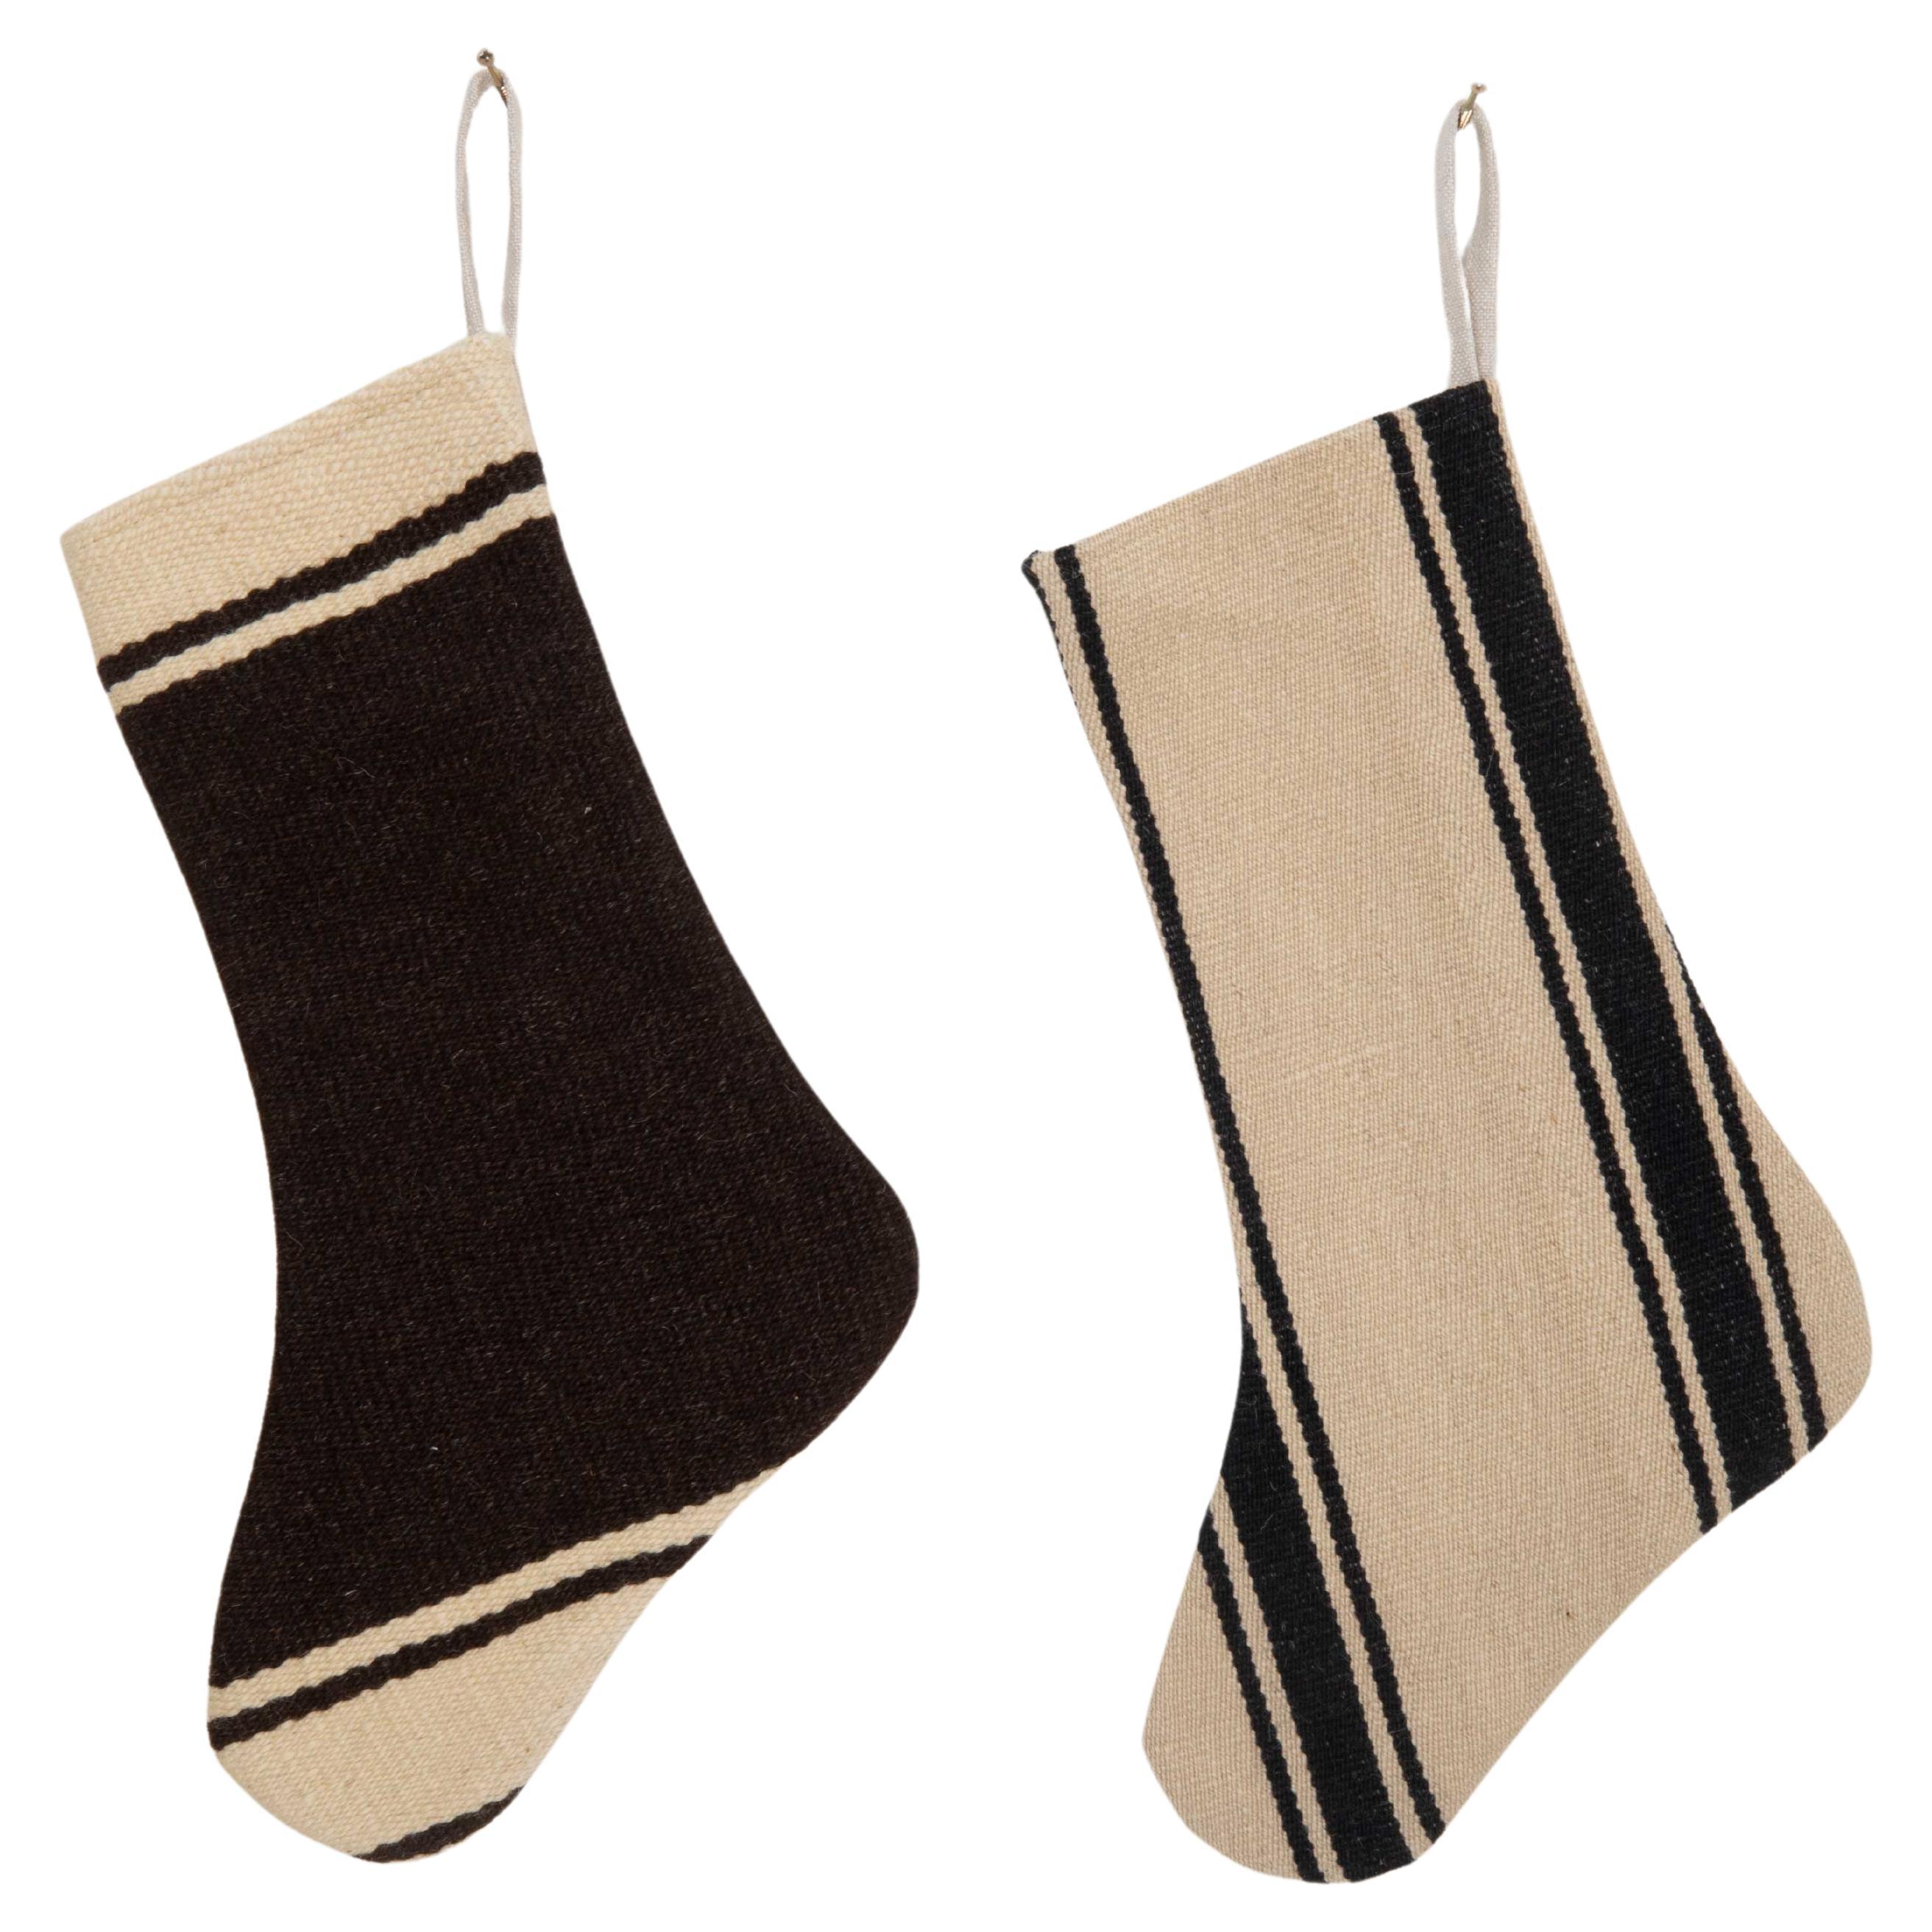 Christmas Stockings Made from Anatolian Kilim Fragments